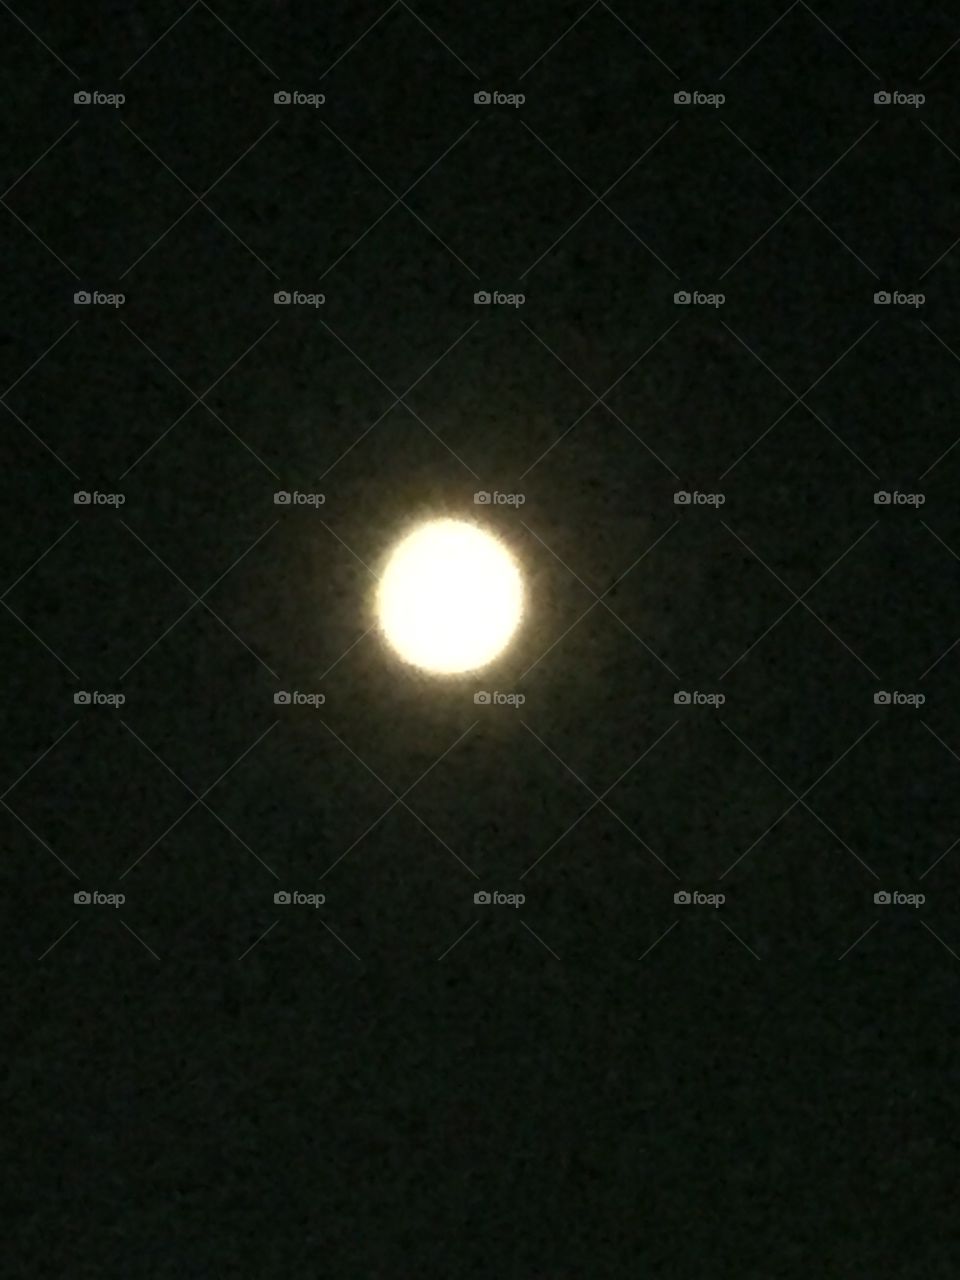 Moon before Chandrayaan 2 rover landing 